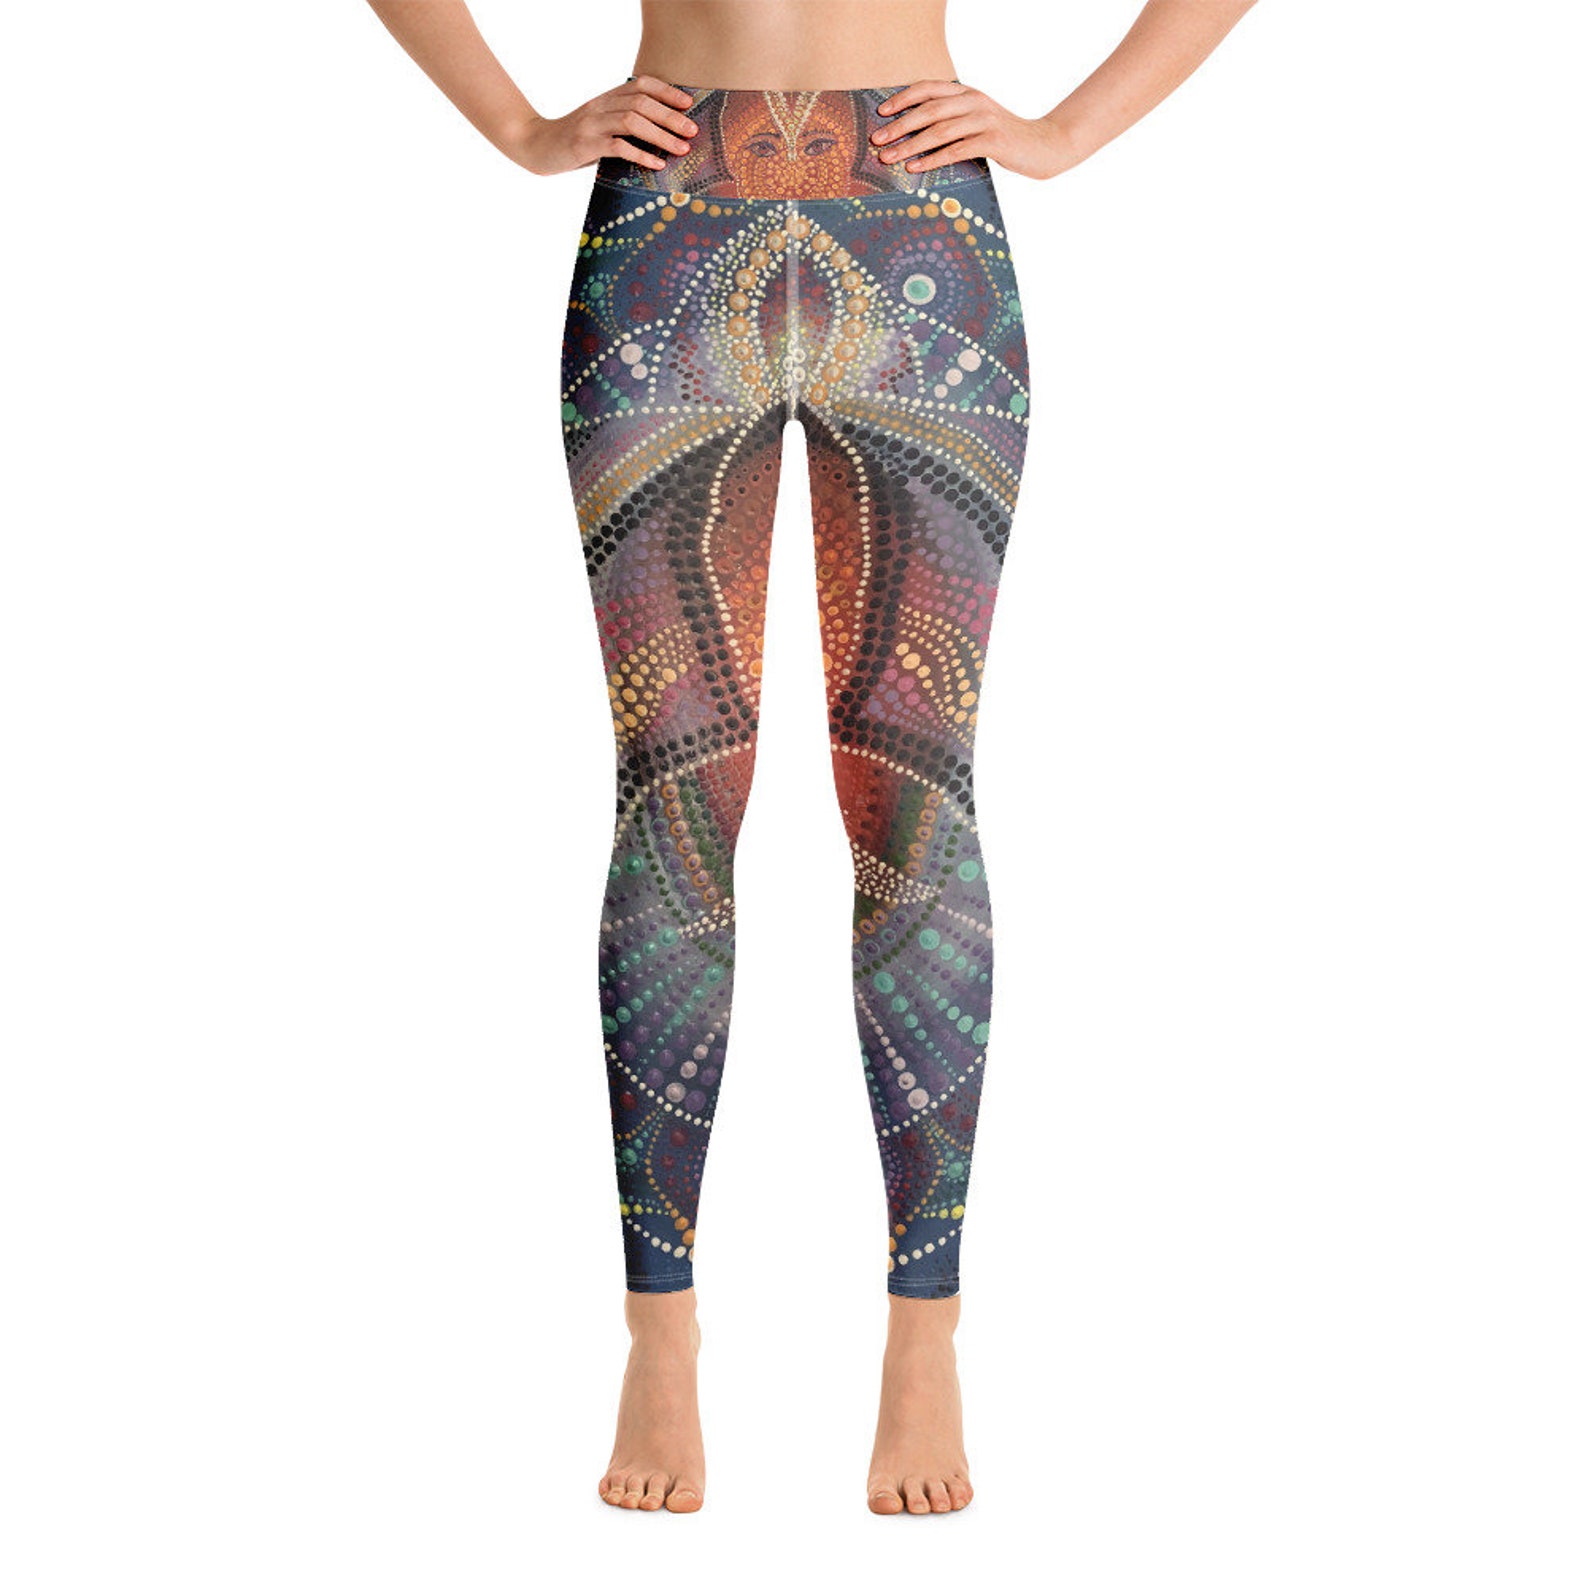 Just $39.95 Classic Women's High Waisted Yoga Pants.  Yoga pants hot,  Leggings are not pants, Lulu yoga pants